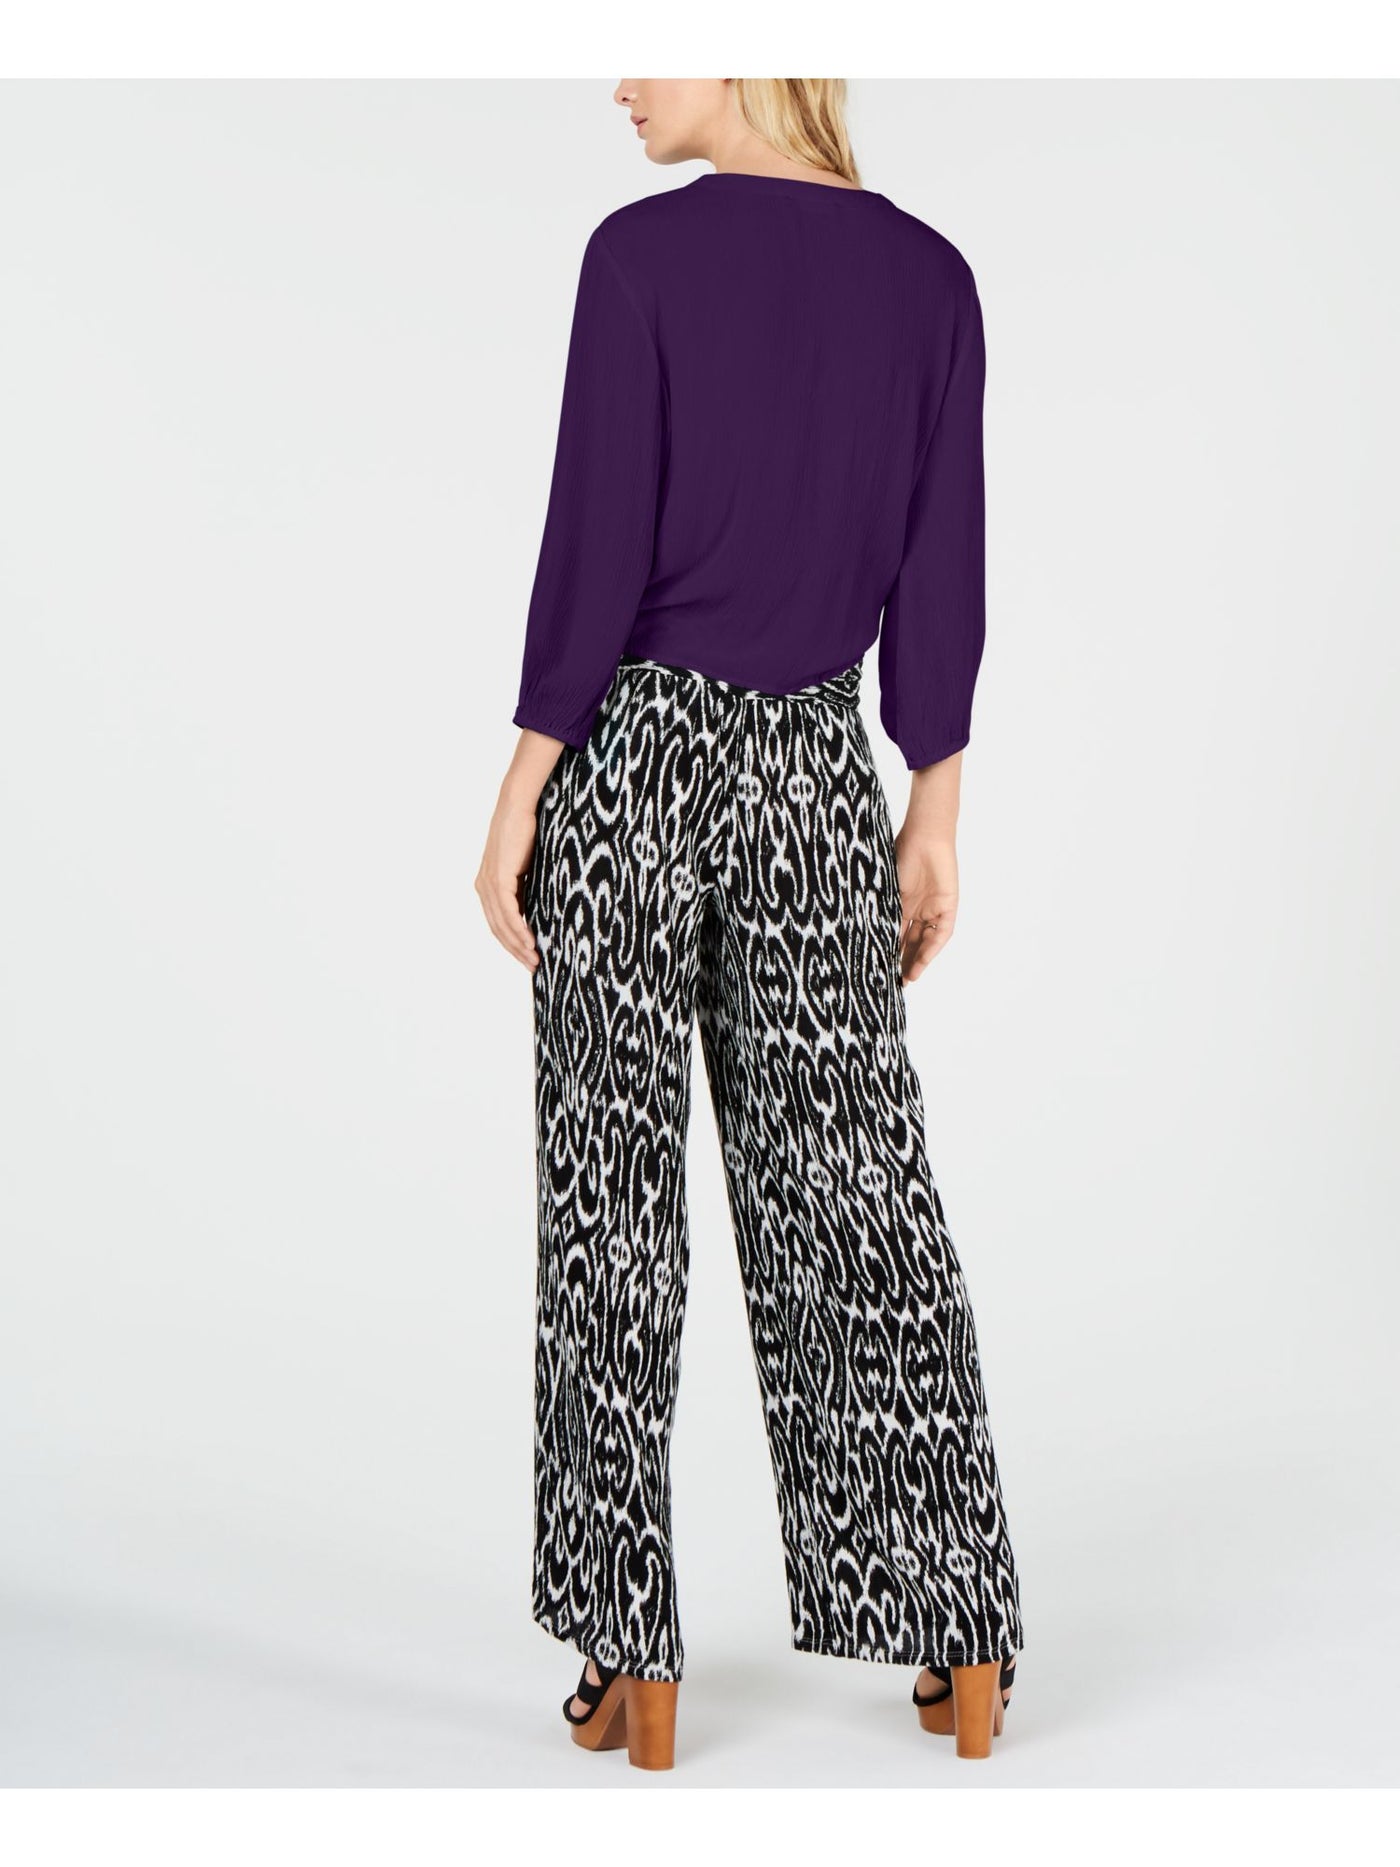 INC Womens Purple Long Sleeve V Neck Crop Top Size: XS